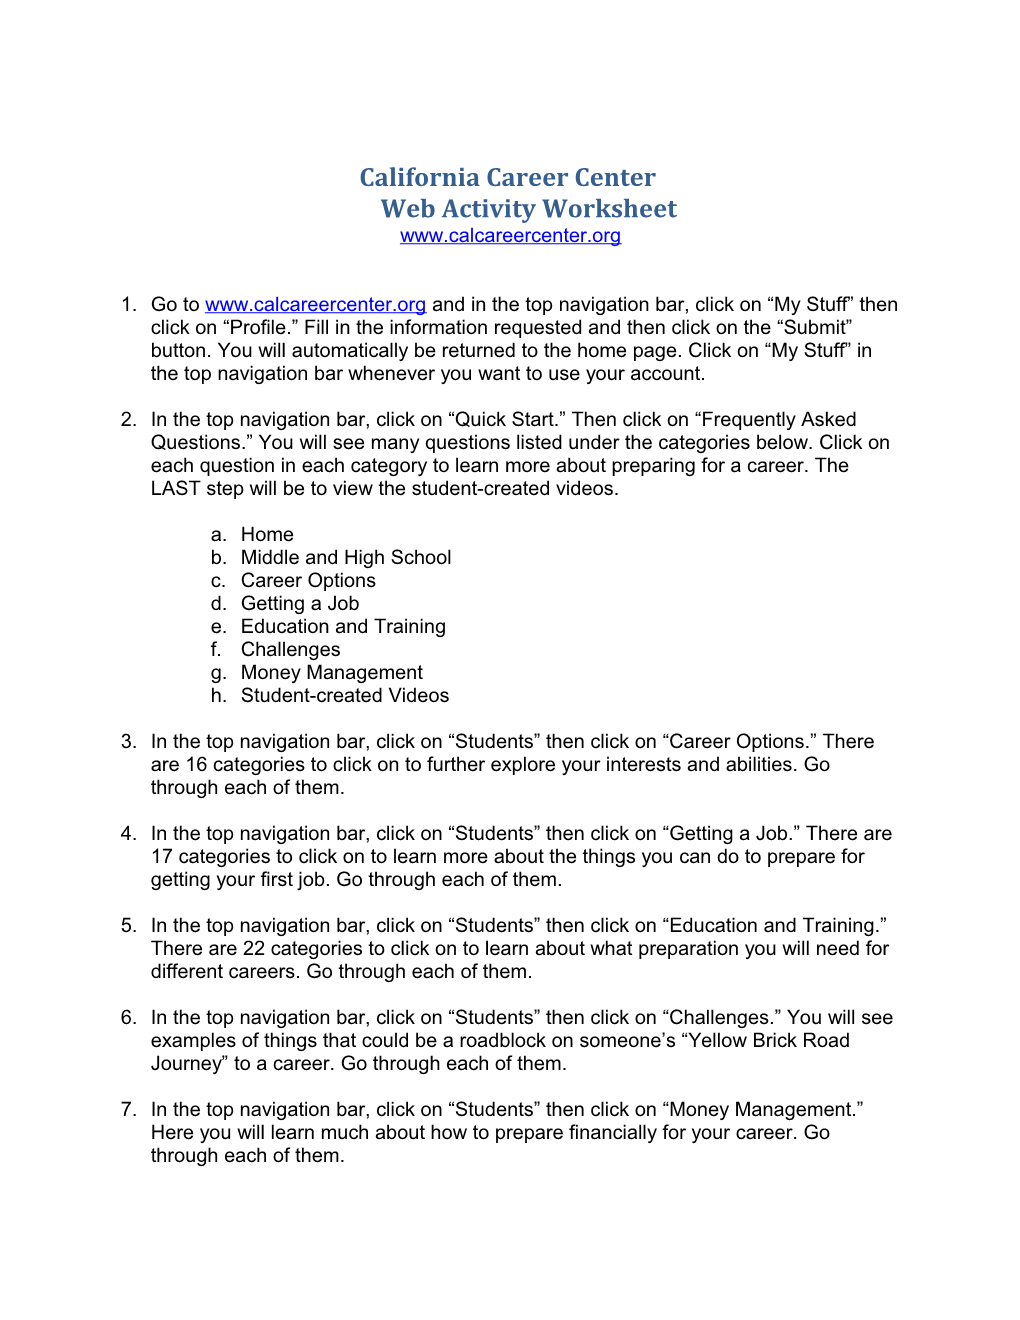 California Career Center Web Activity Worksheet